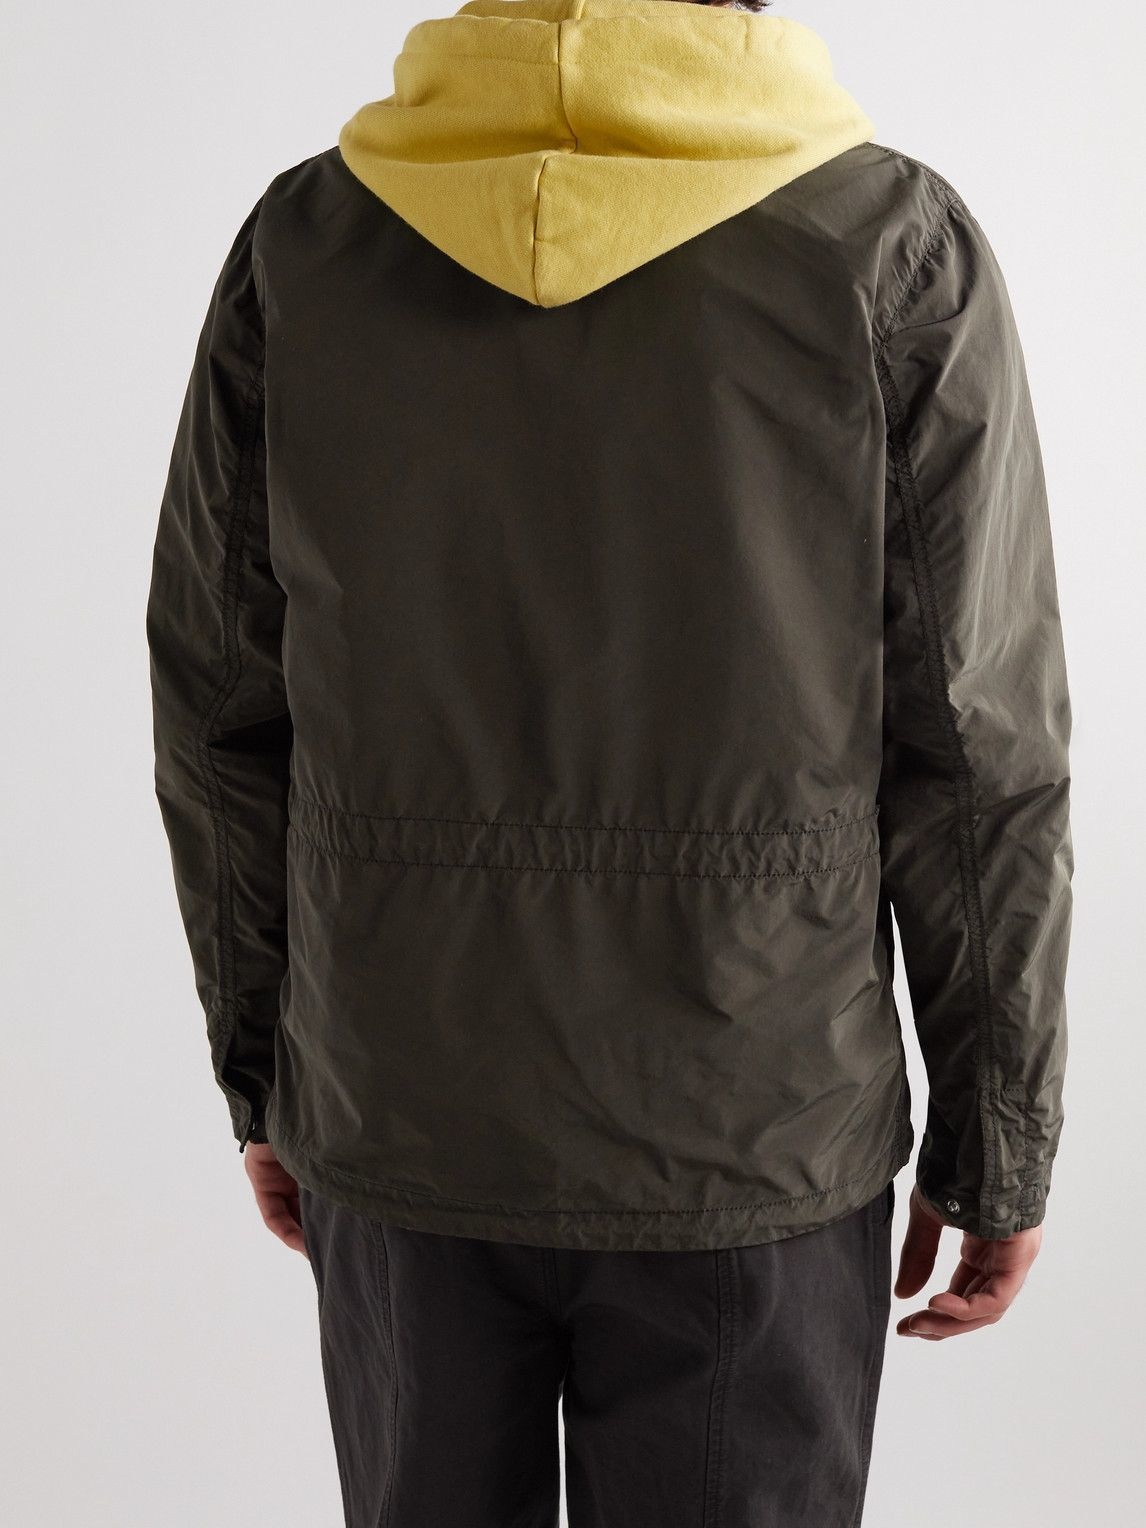 Aspesi - Garment-Dyed Shell Jacket - Green Aspesi